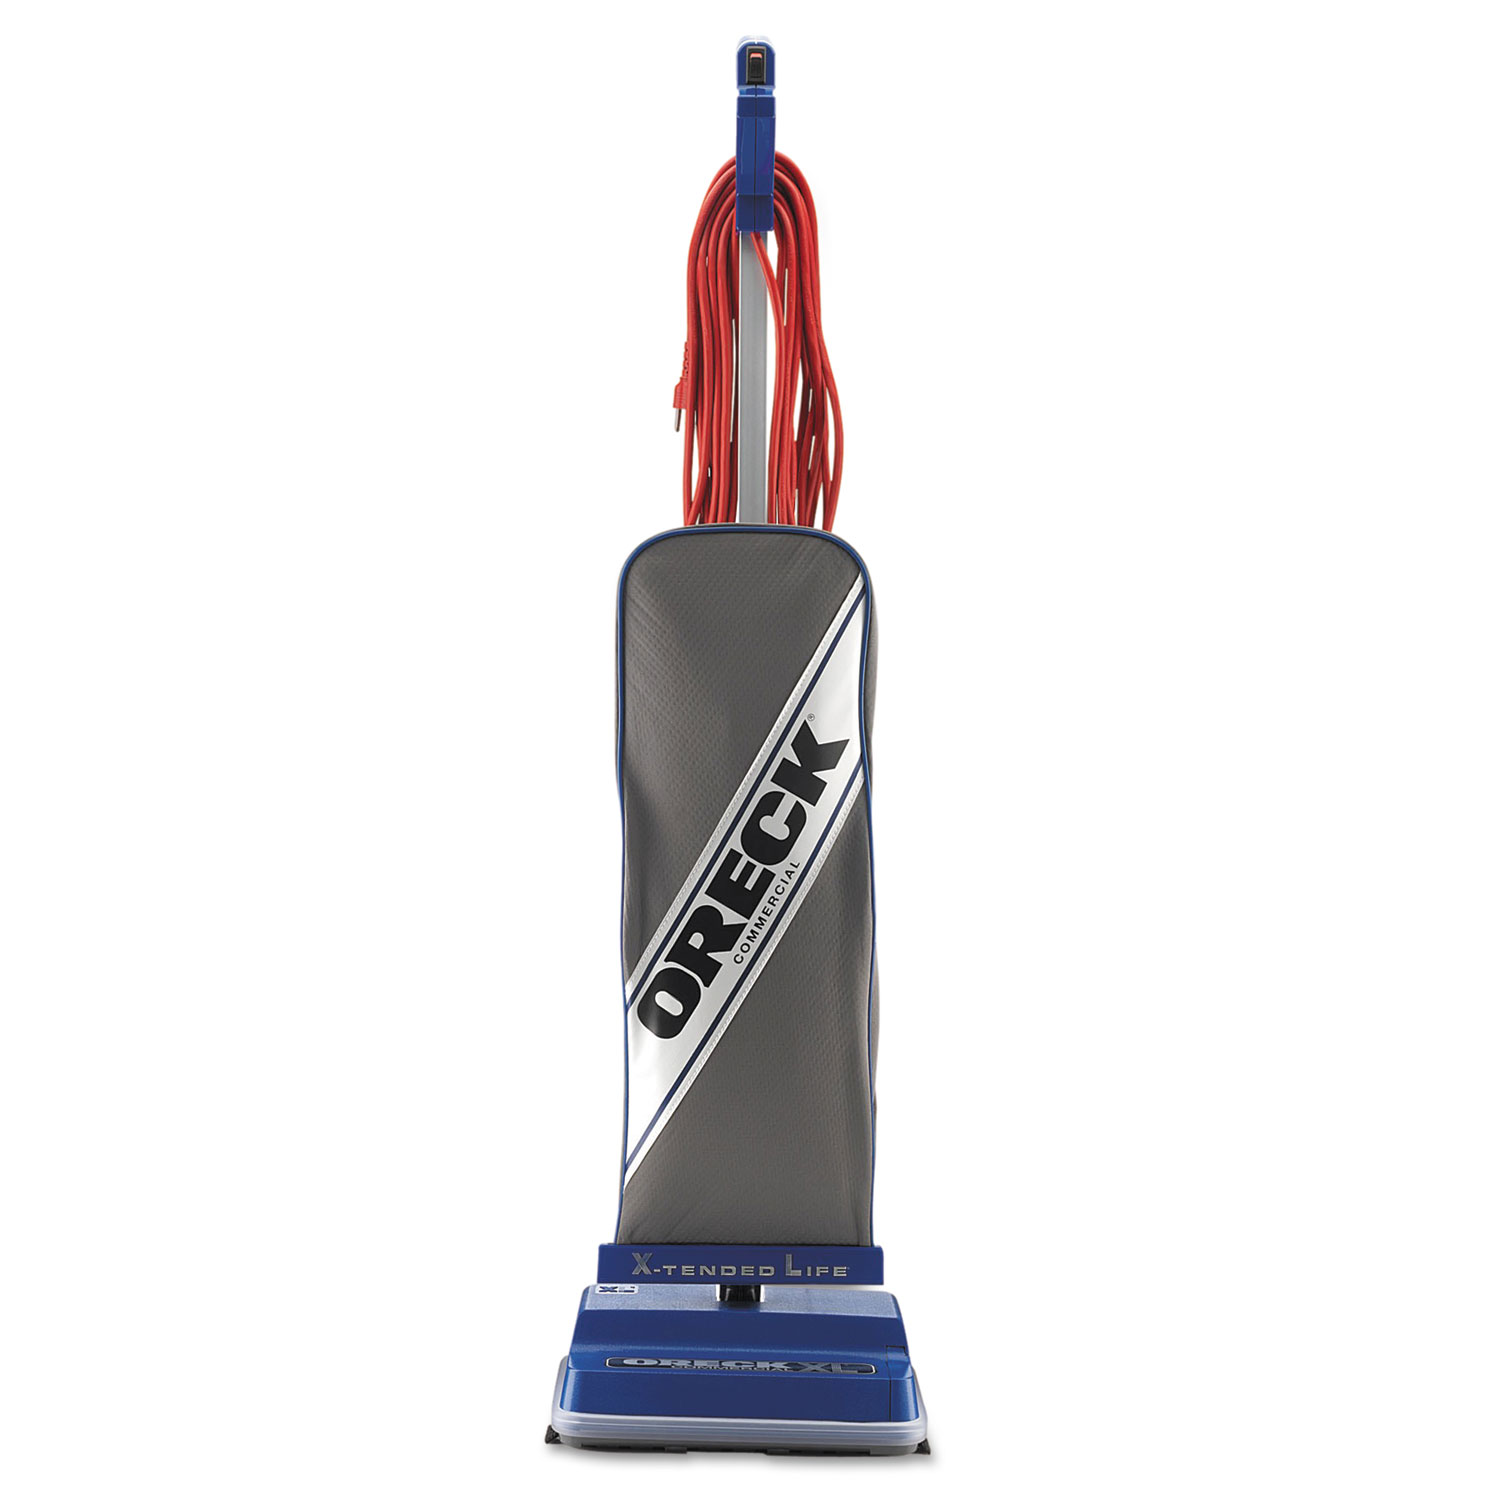  Oreck Commercial XL2100RHS XL Commercial Upright Vacuum,120 V, Gray/Blue, 12 1/2 x 9 1/4 x 47 3/4 (ORKXL2100RHS) 